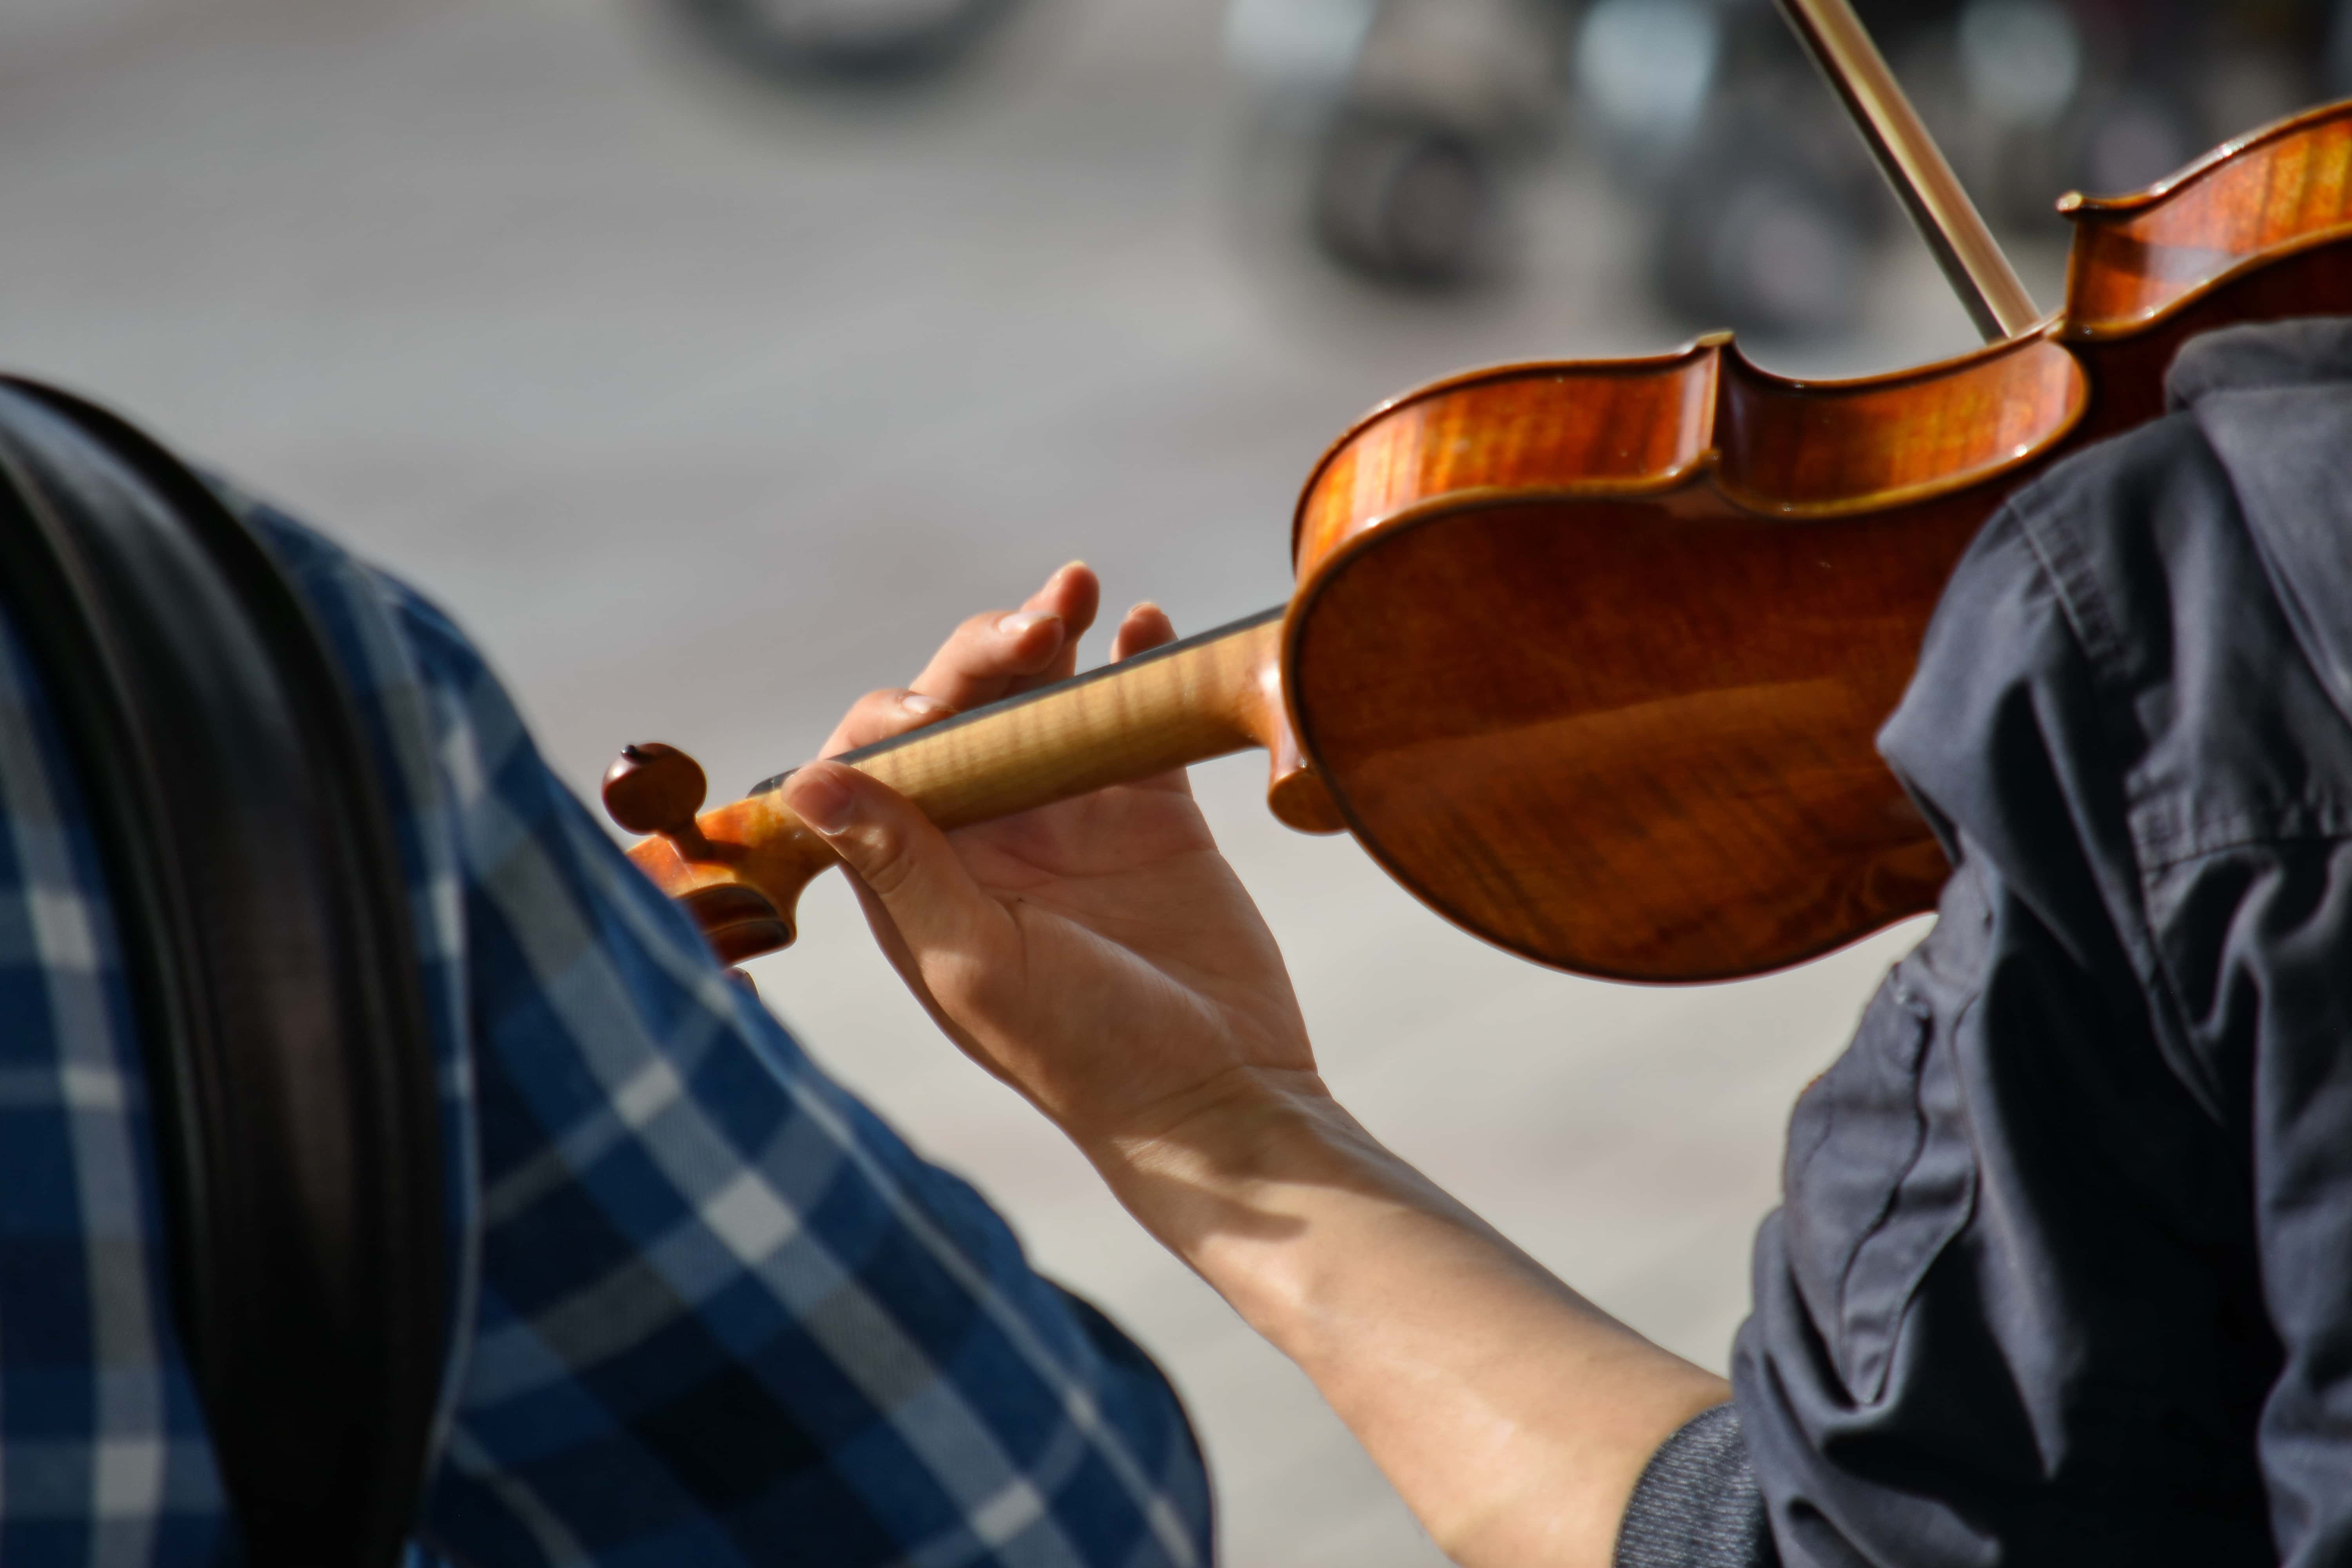 Скрипка на улице. Человек со скрипкой. Скрипач на улице. Violin и человек. Скрипка в руках.